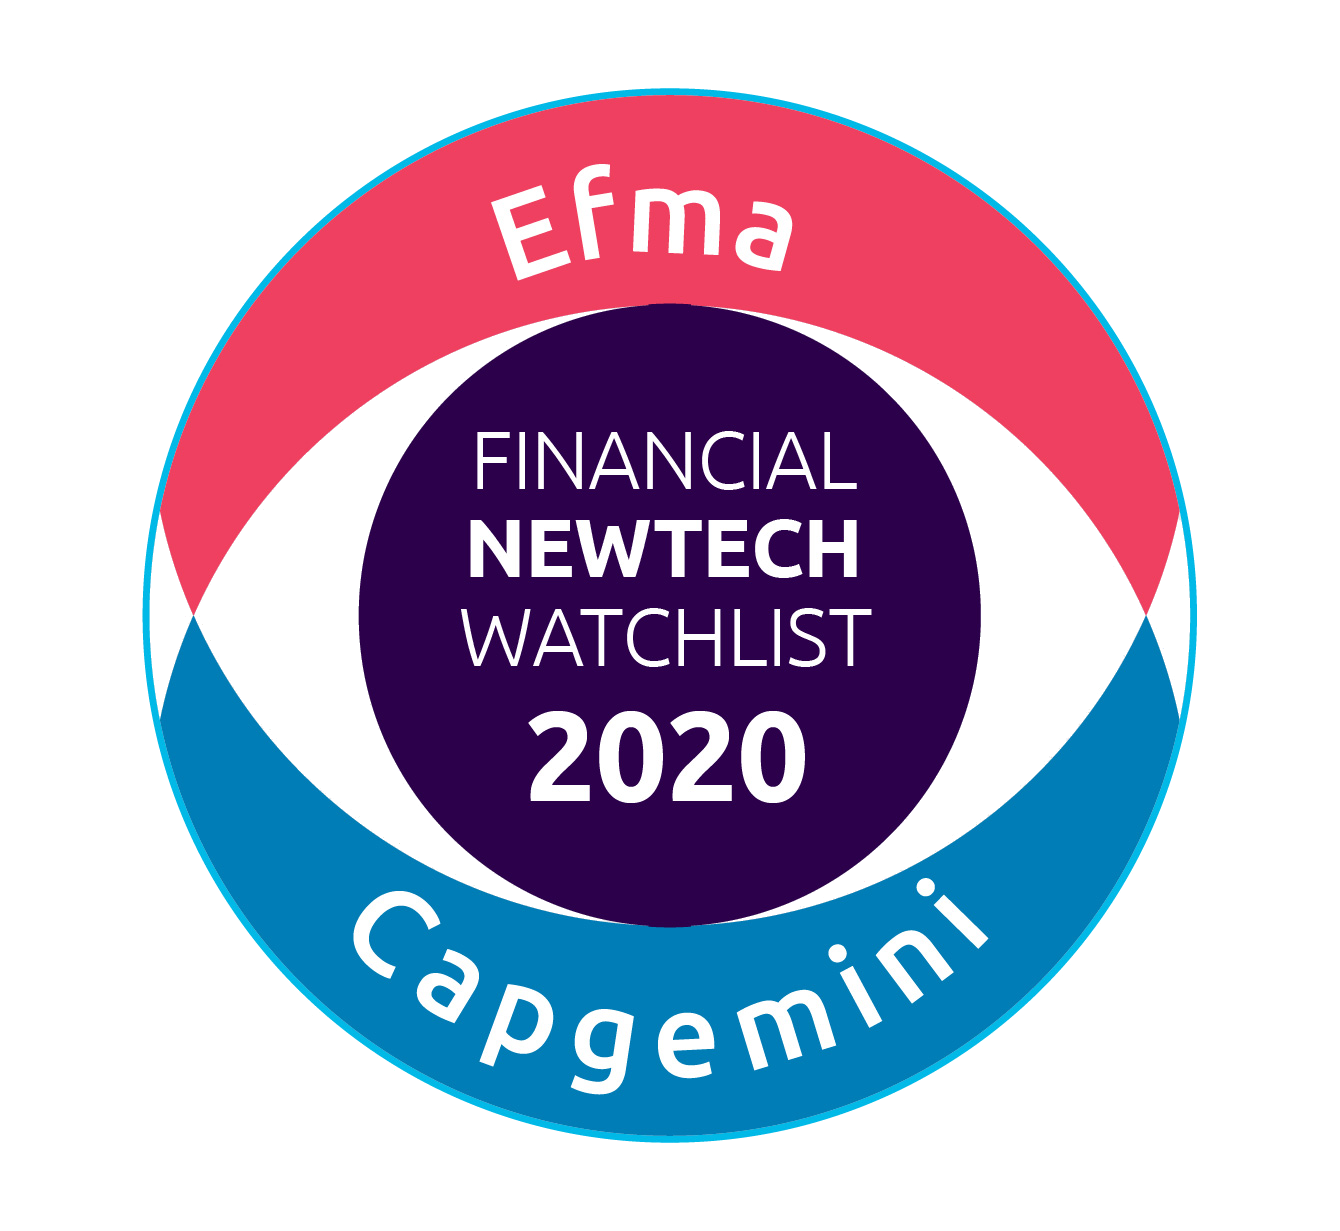 Sedicii makes The Financial NewTech Watchlist for 2020